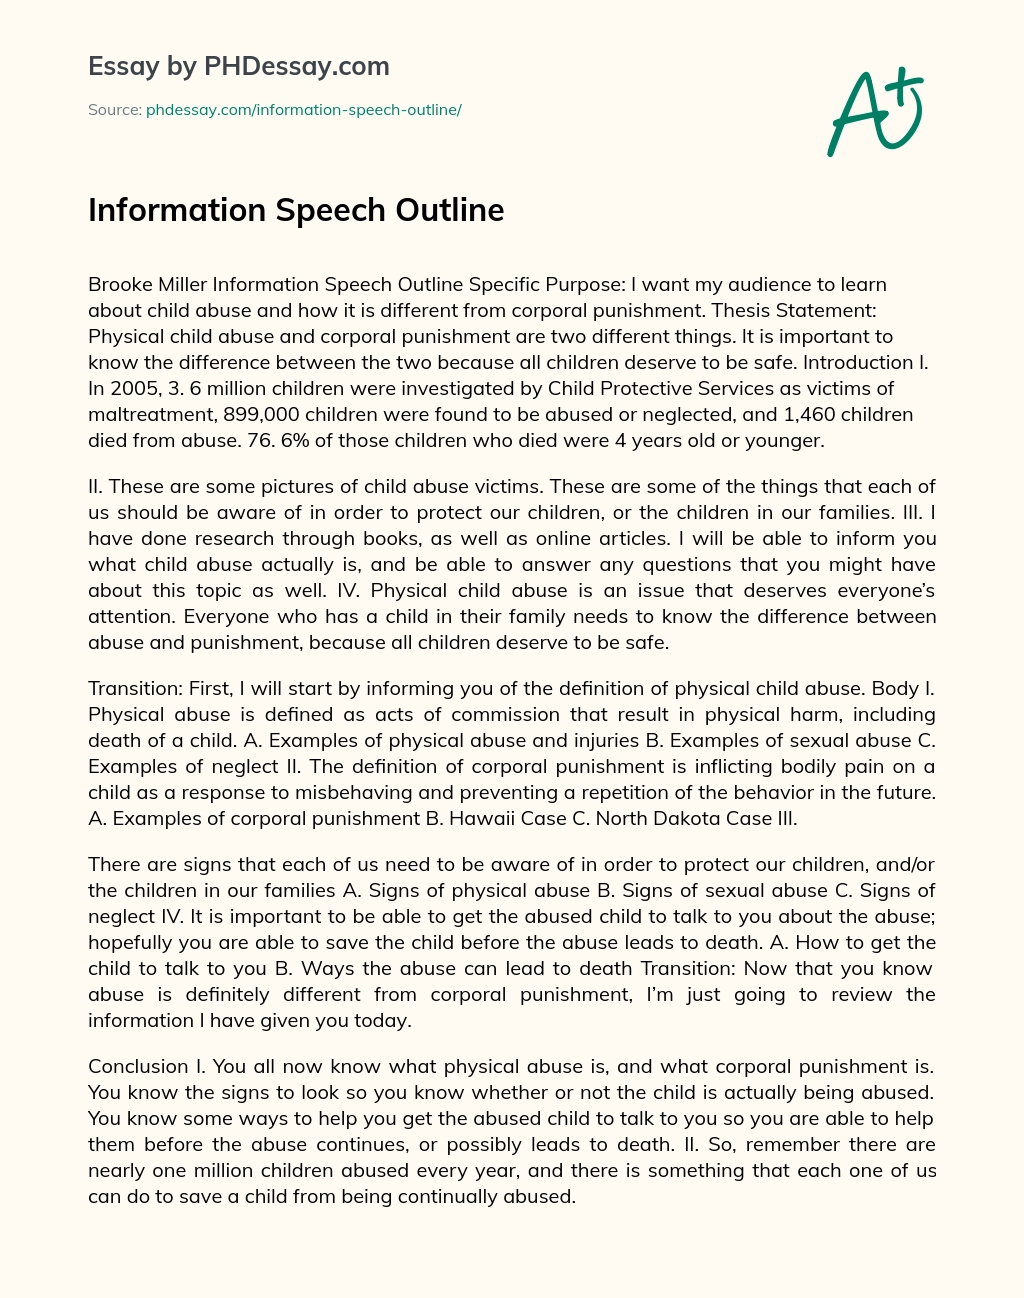 Information Speech Outline essay